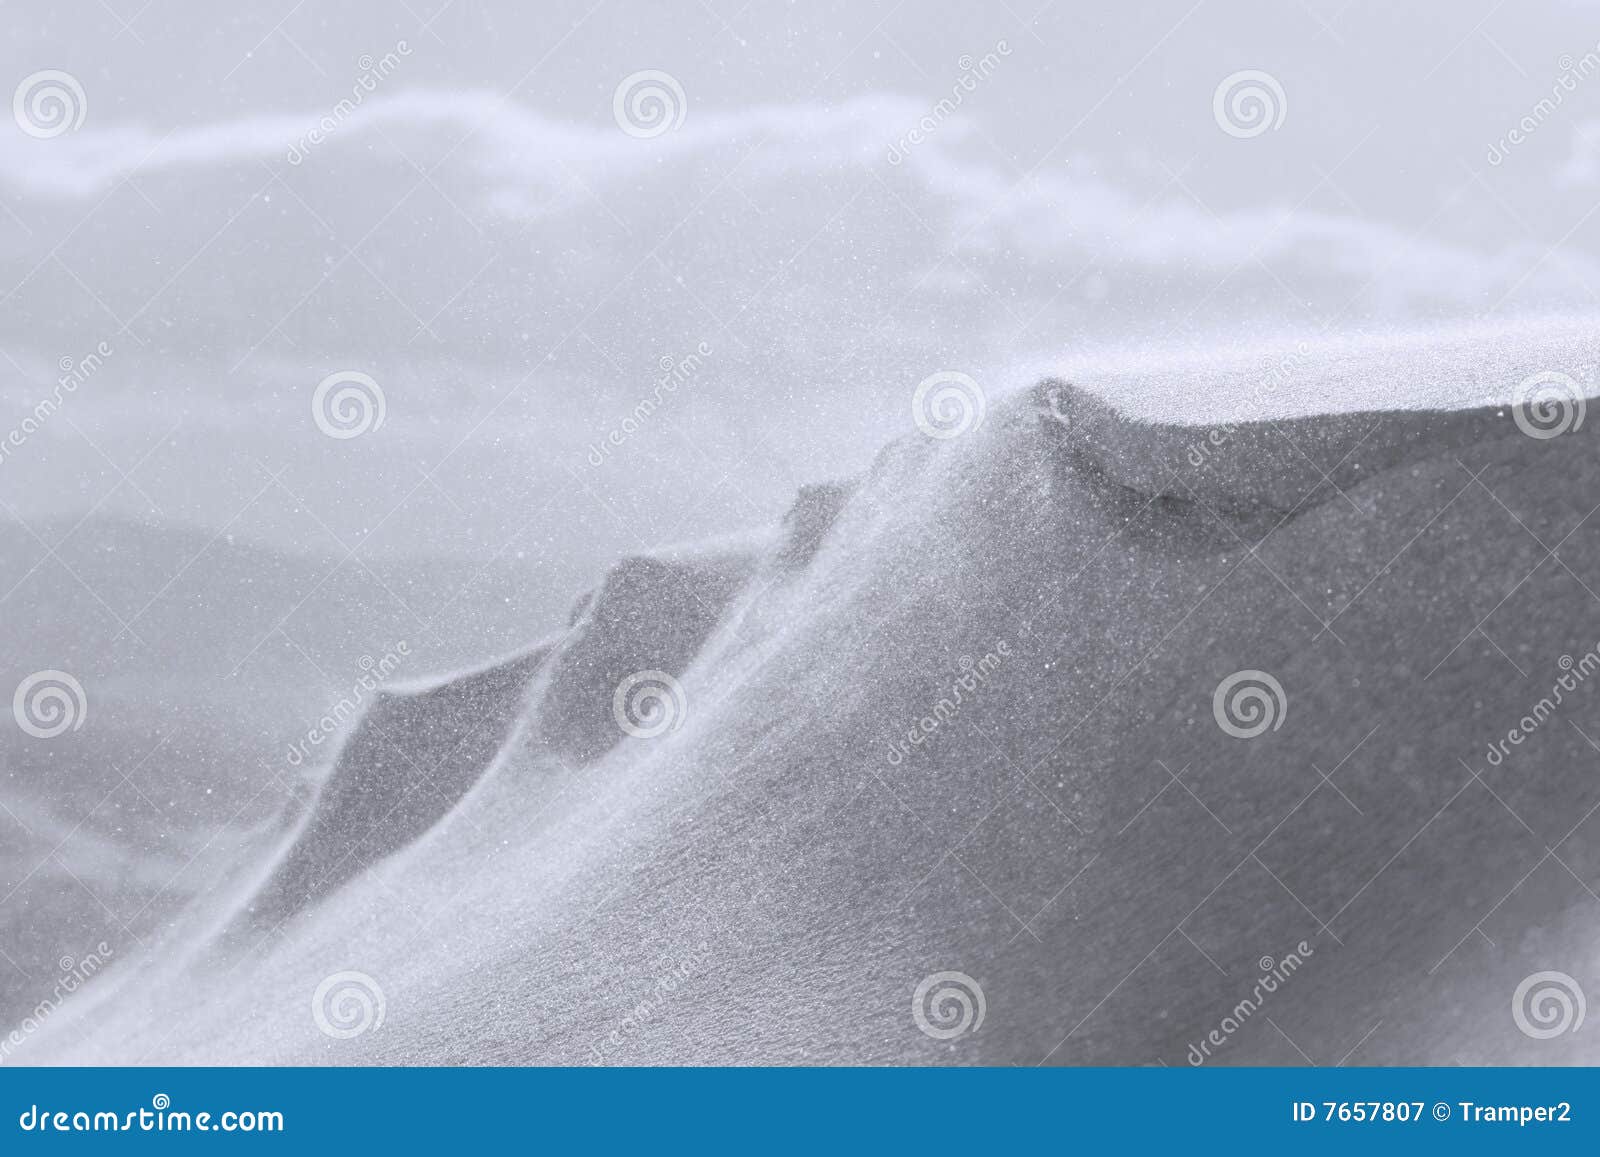 clipart snow drifts - photo #32